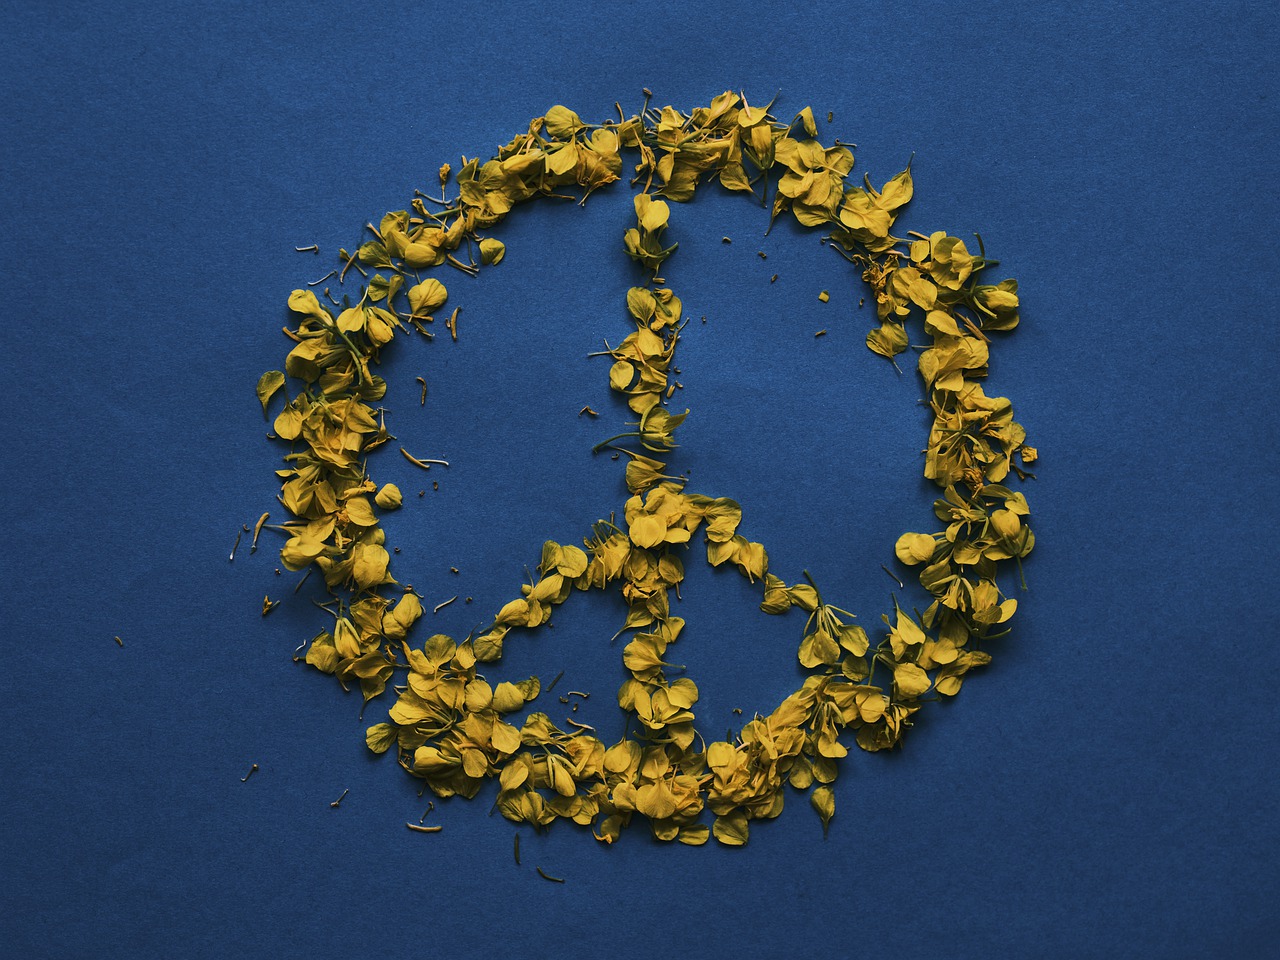 Flowers arranged into a peace symbol